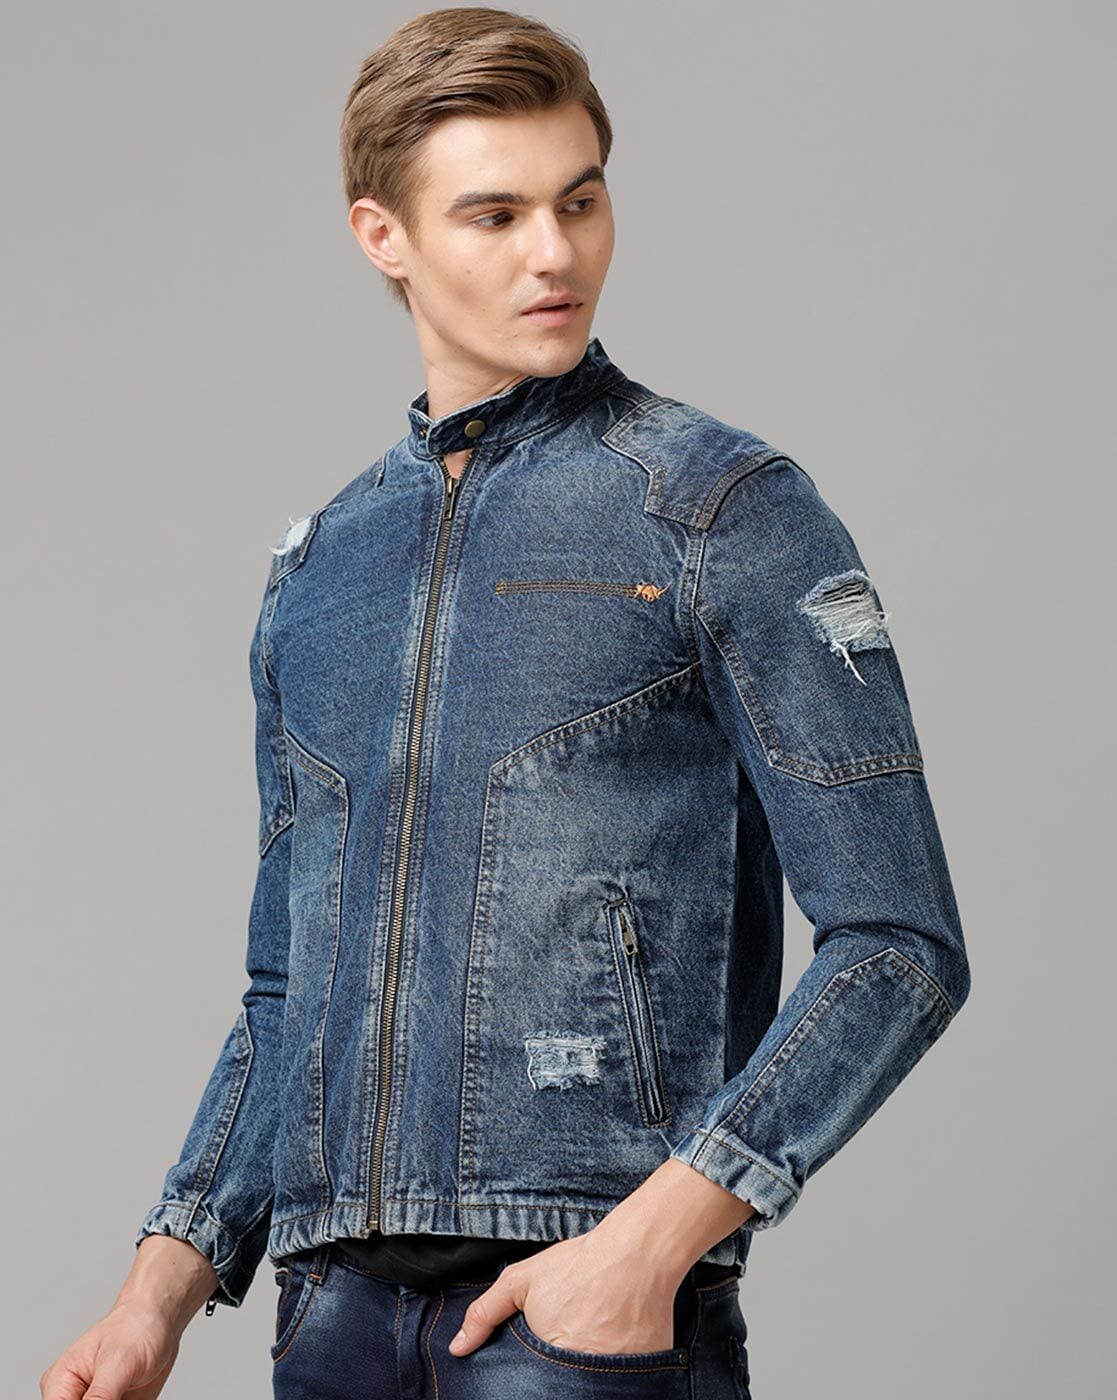 Men's Lapel Biker Denim Jacket Men's Denim Jacket Fashion Tops at Amazon  Men's Clothing store